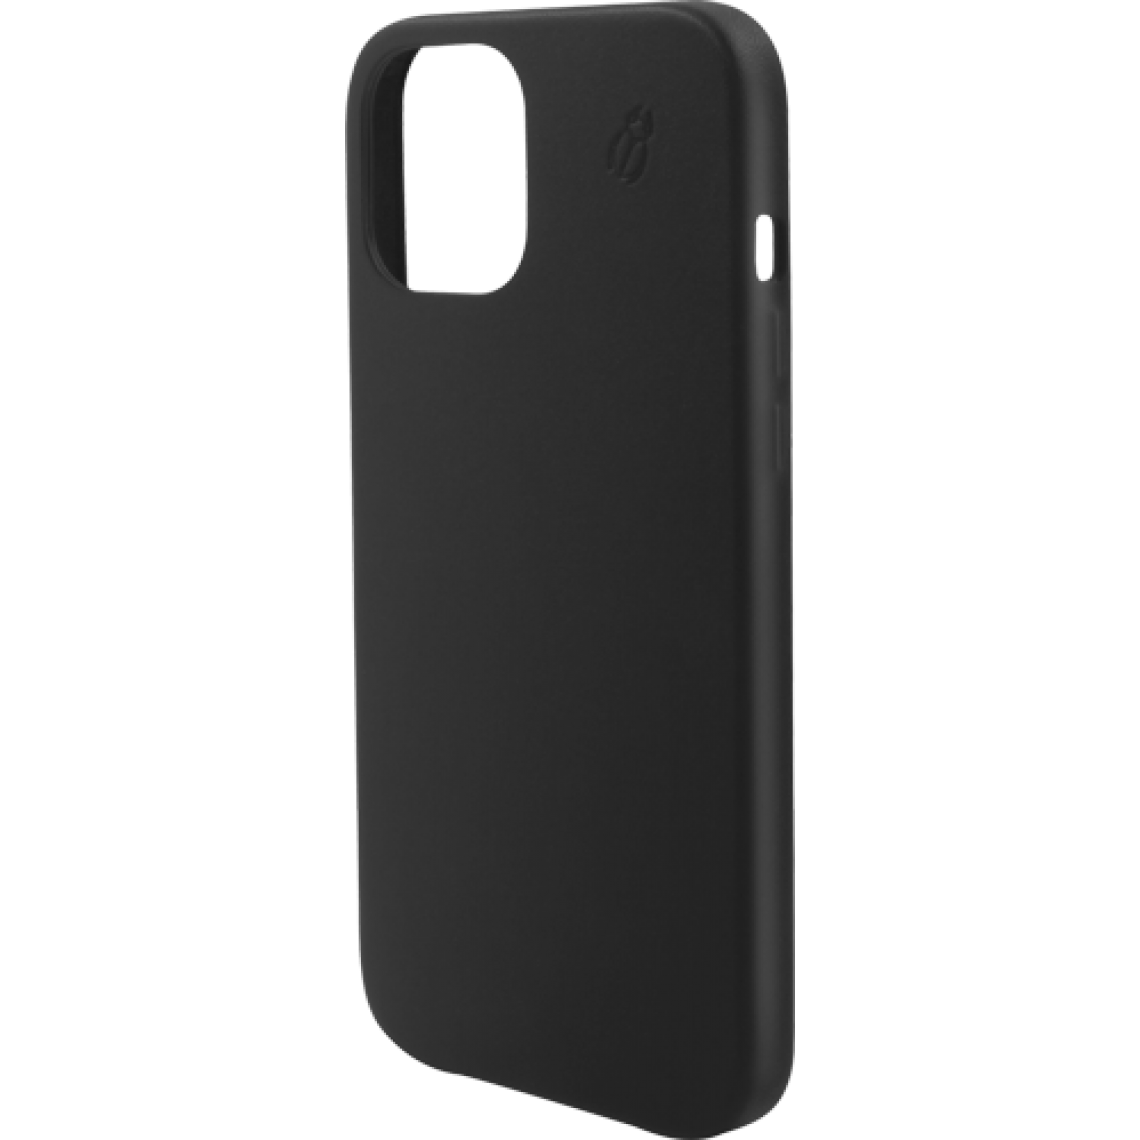 Apple - Coque Premium Noire pour Apple iPhone 12 mini Beetlecase - Coque, étui smartphone